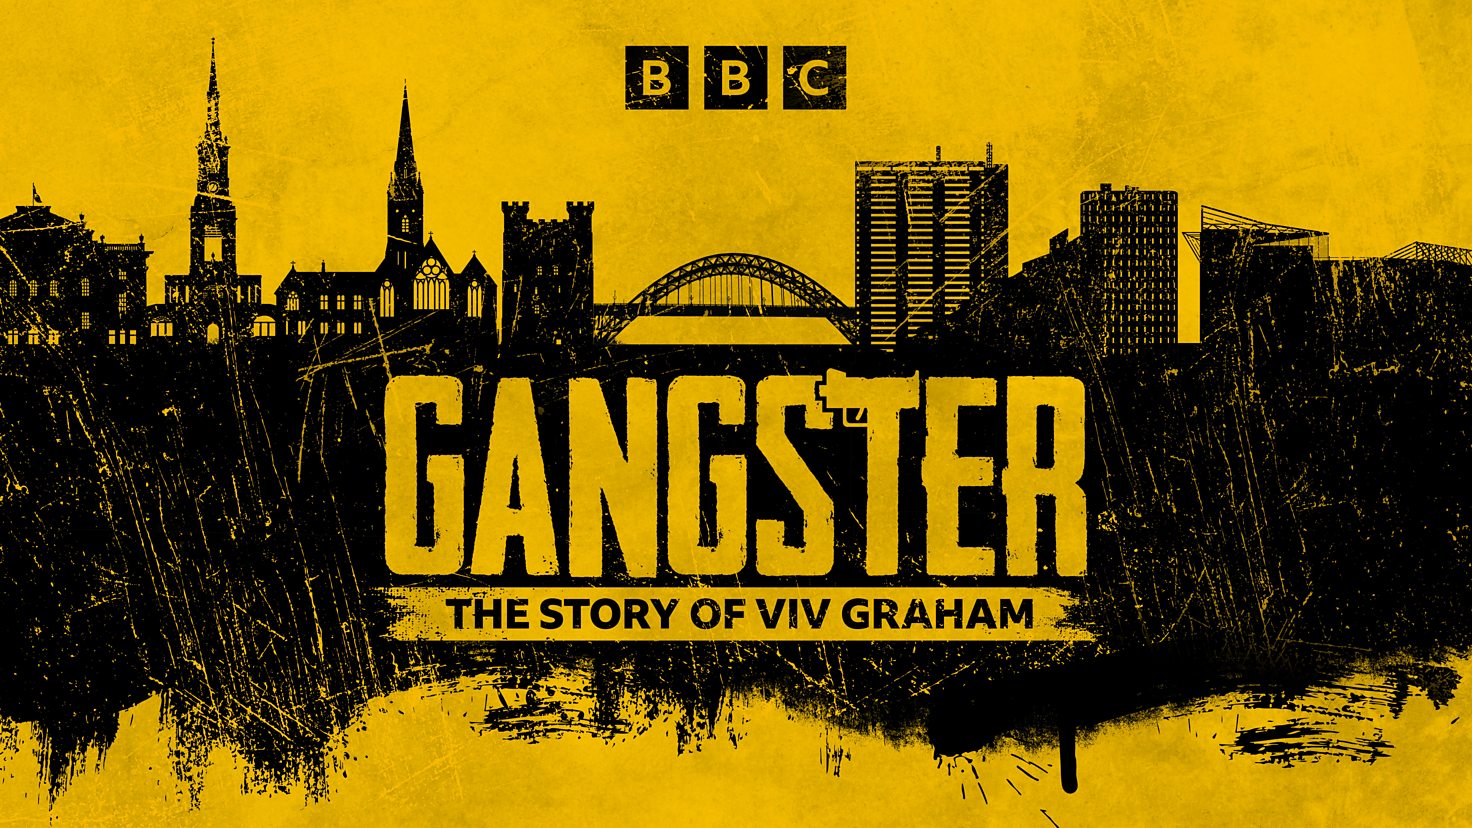 BBC 5 Live’s Gangster podcast returns with the unsolved murder of North-East hardman Viv Graham